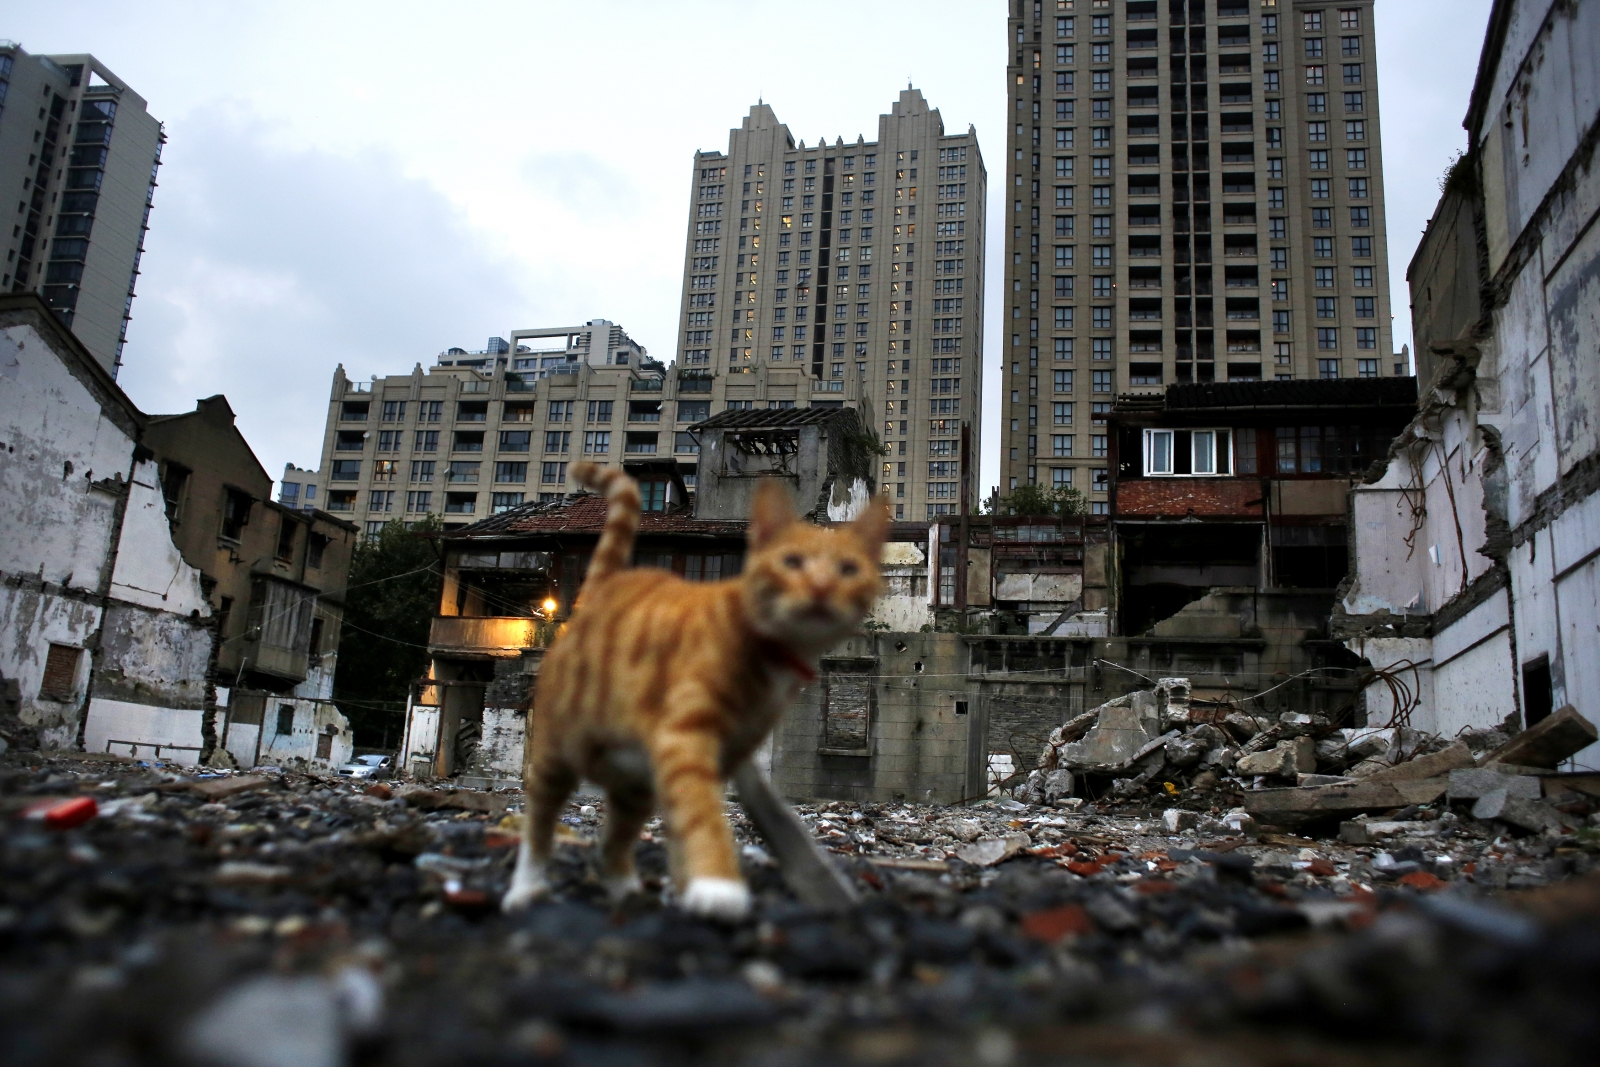 Cat Shanghai Xintiadi Demolition